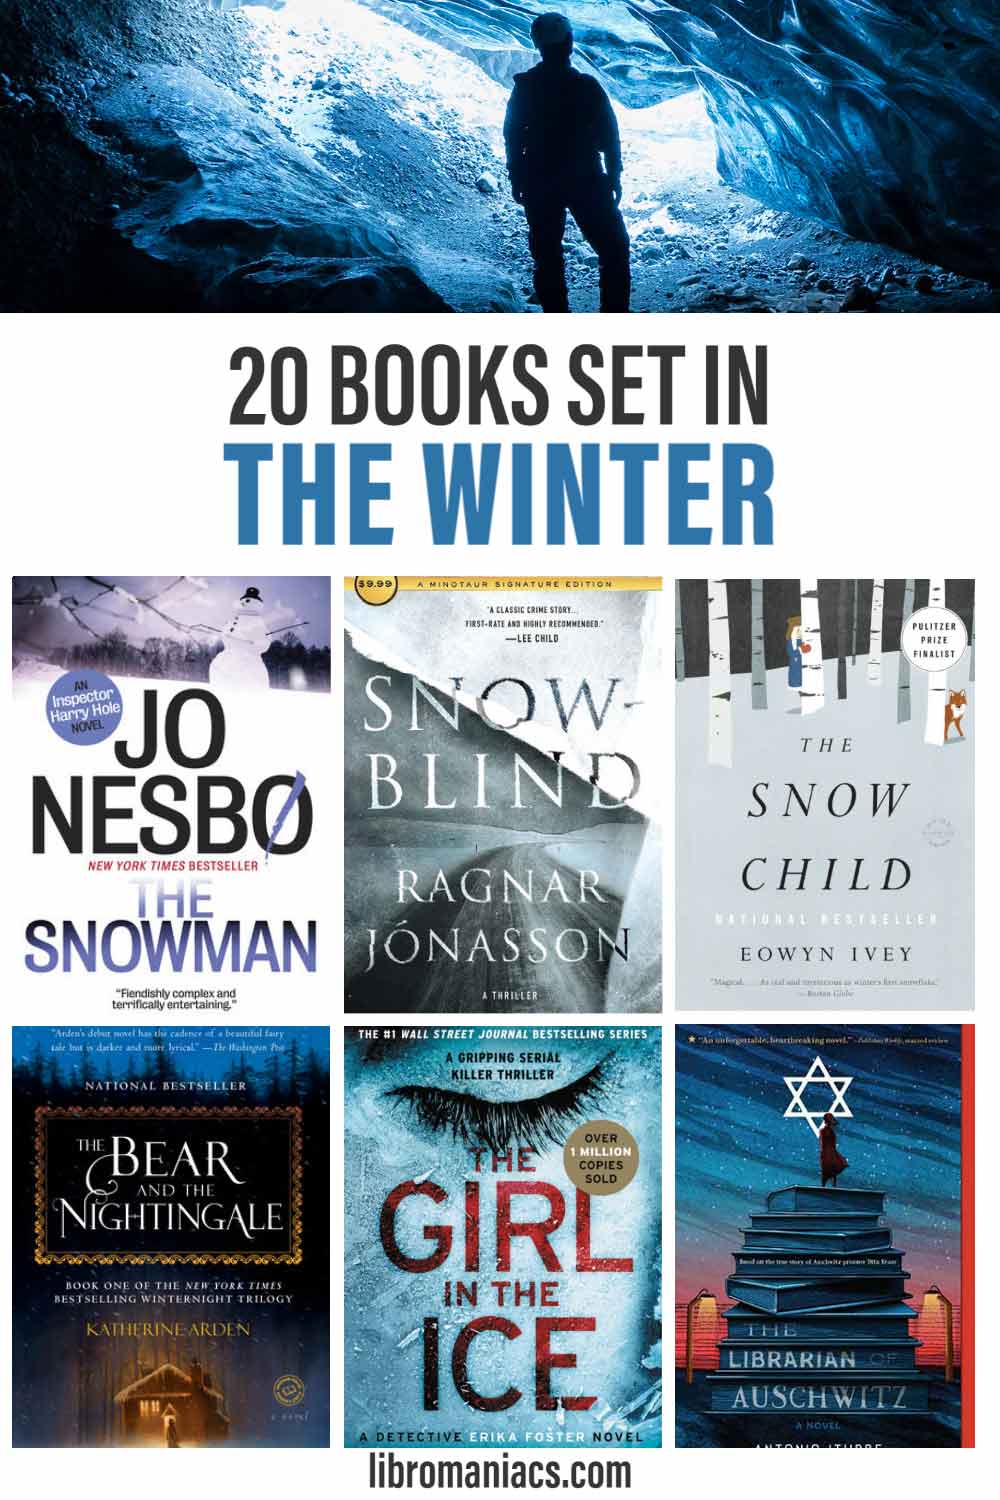 20 books set in the winter